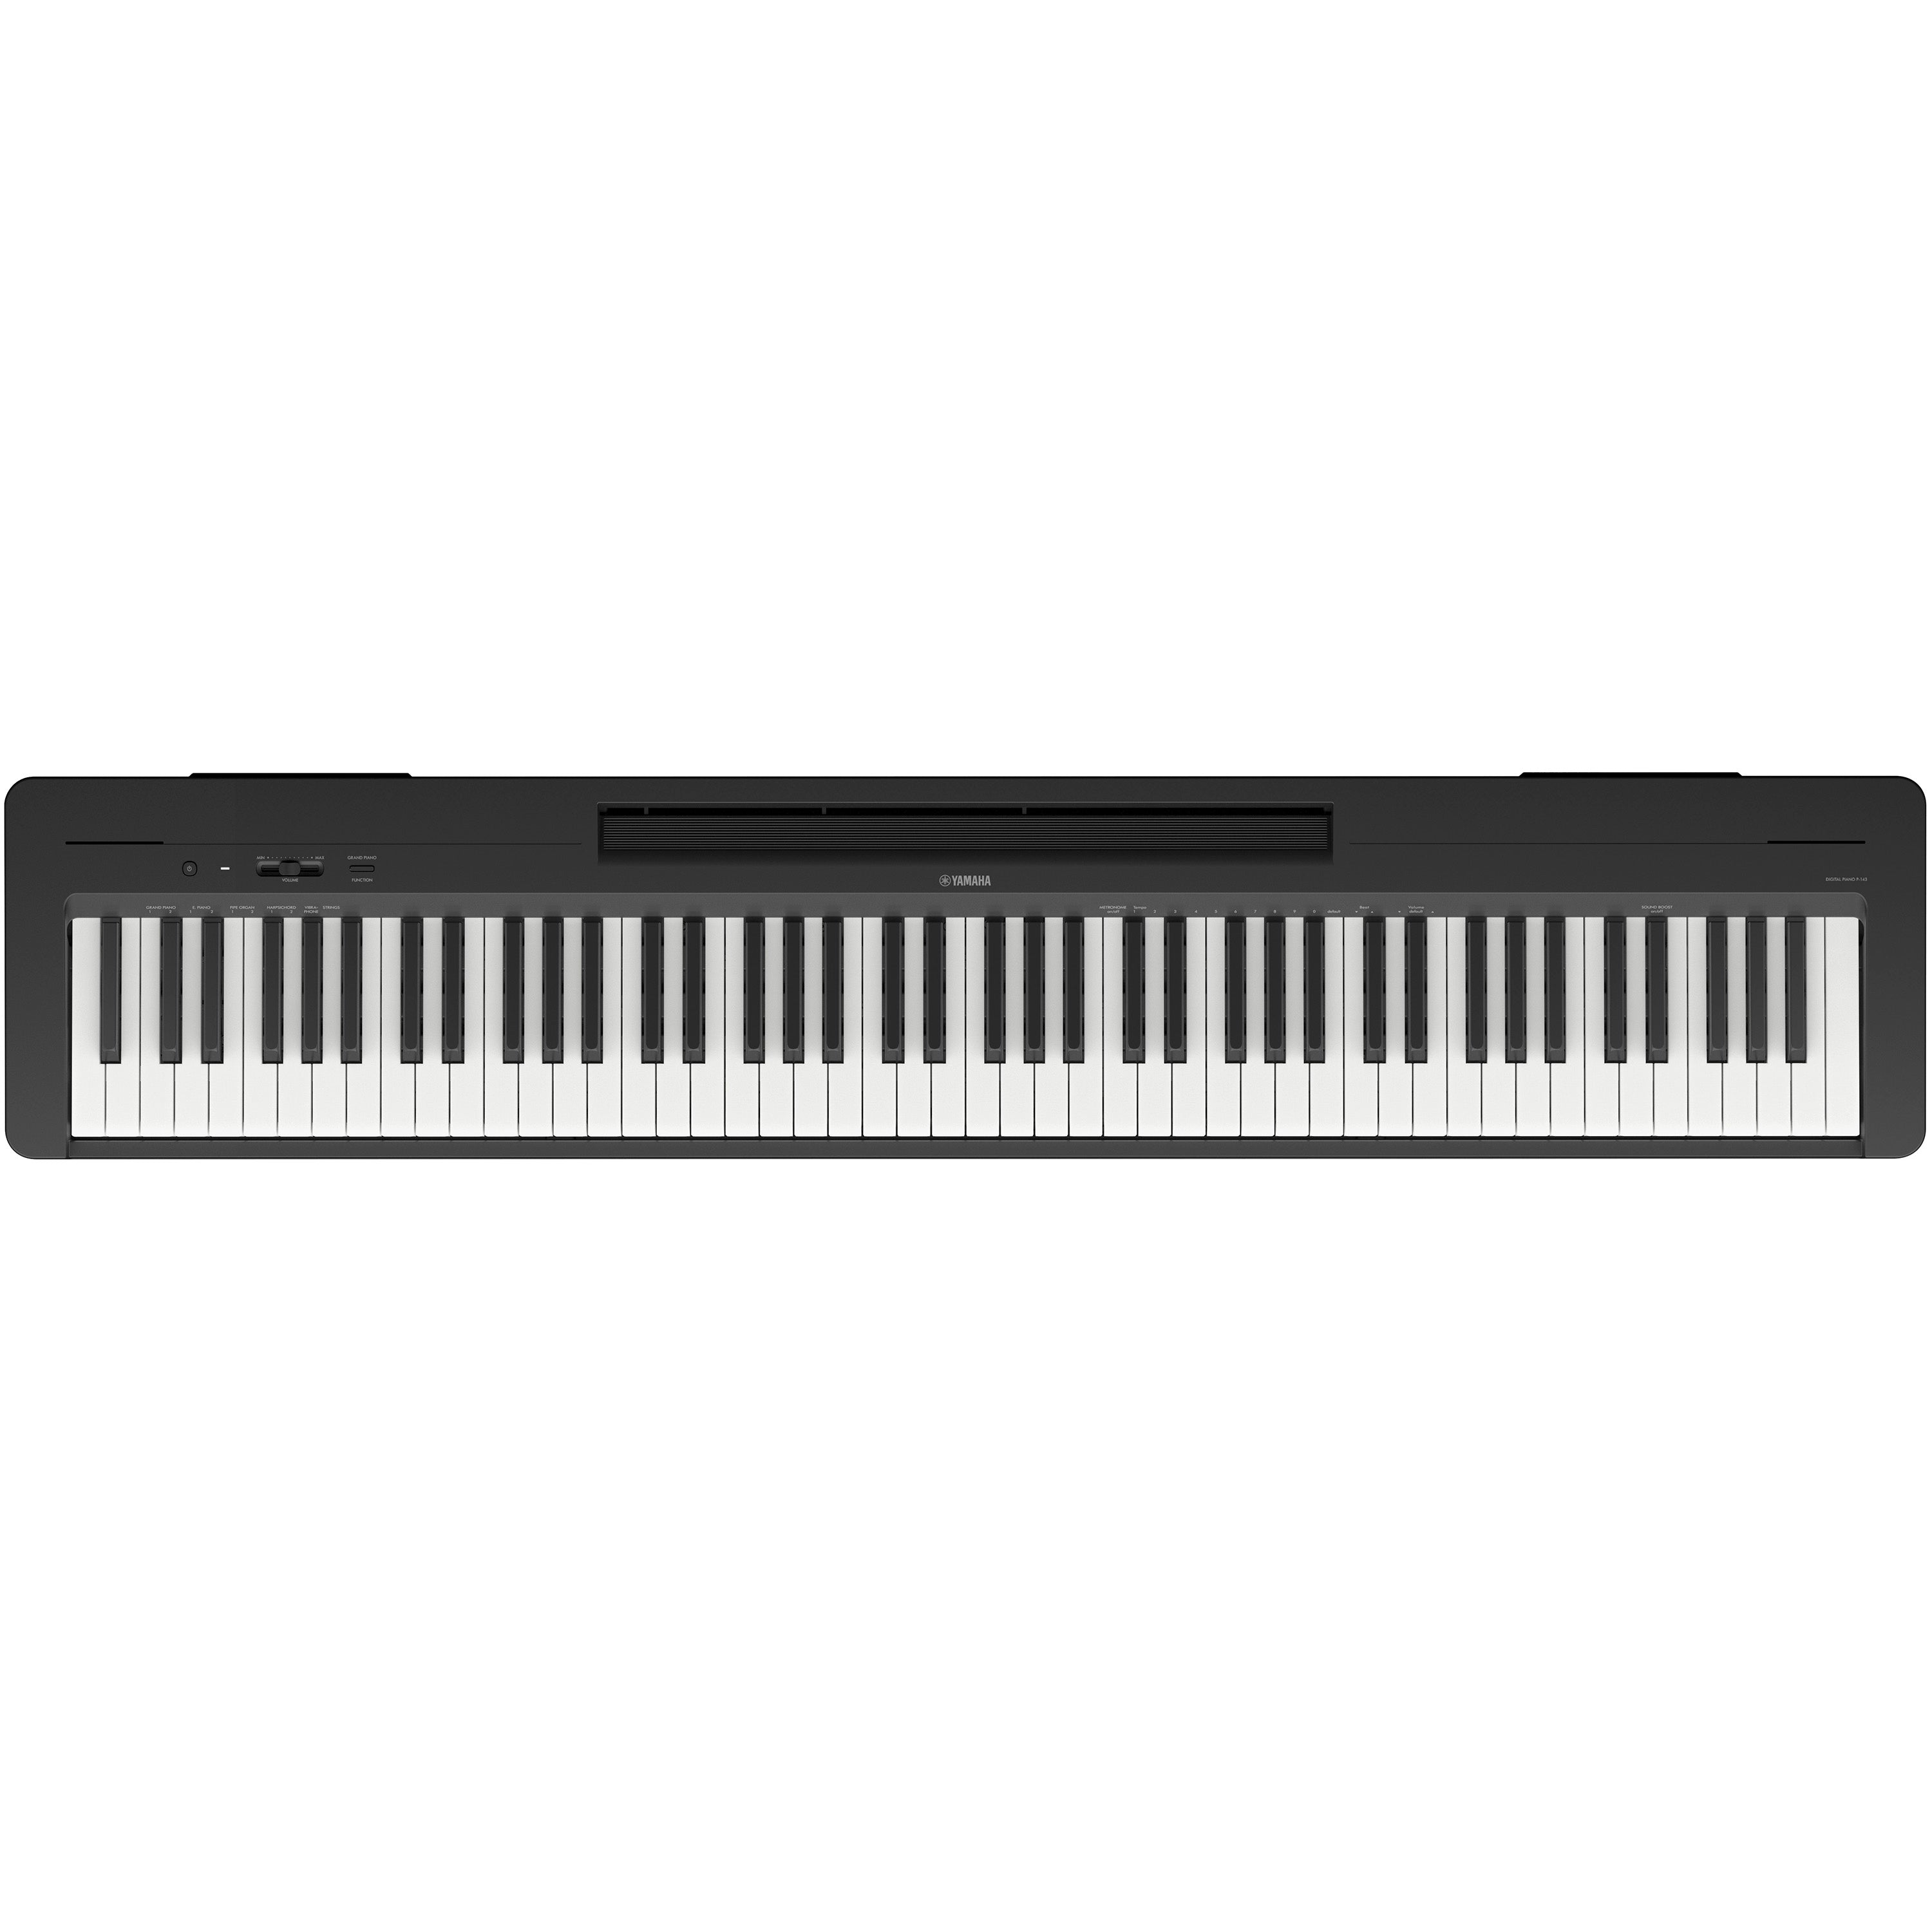 Yamaha P-143 Digital Piano - Black, View 3